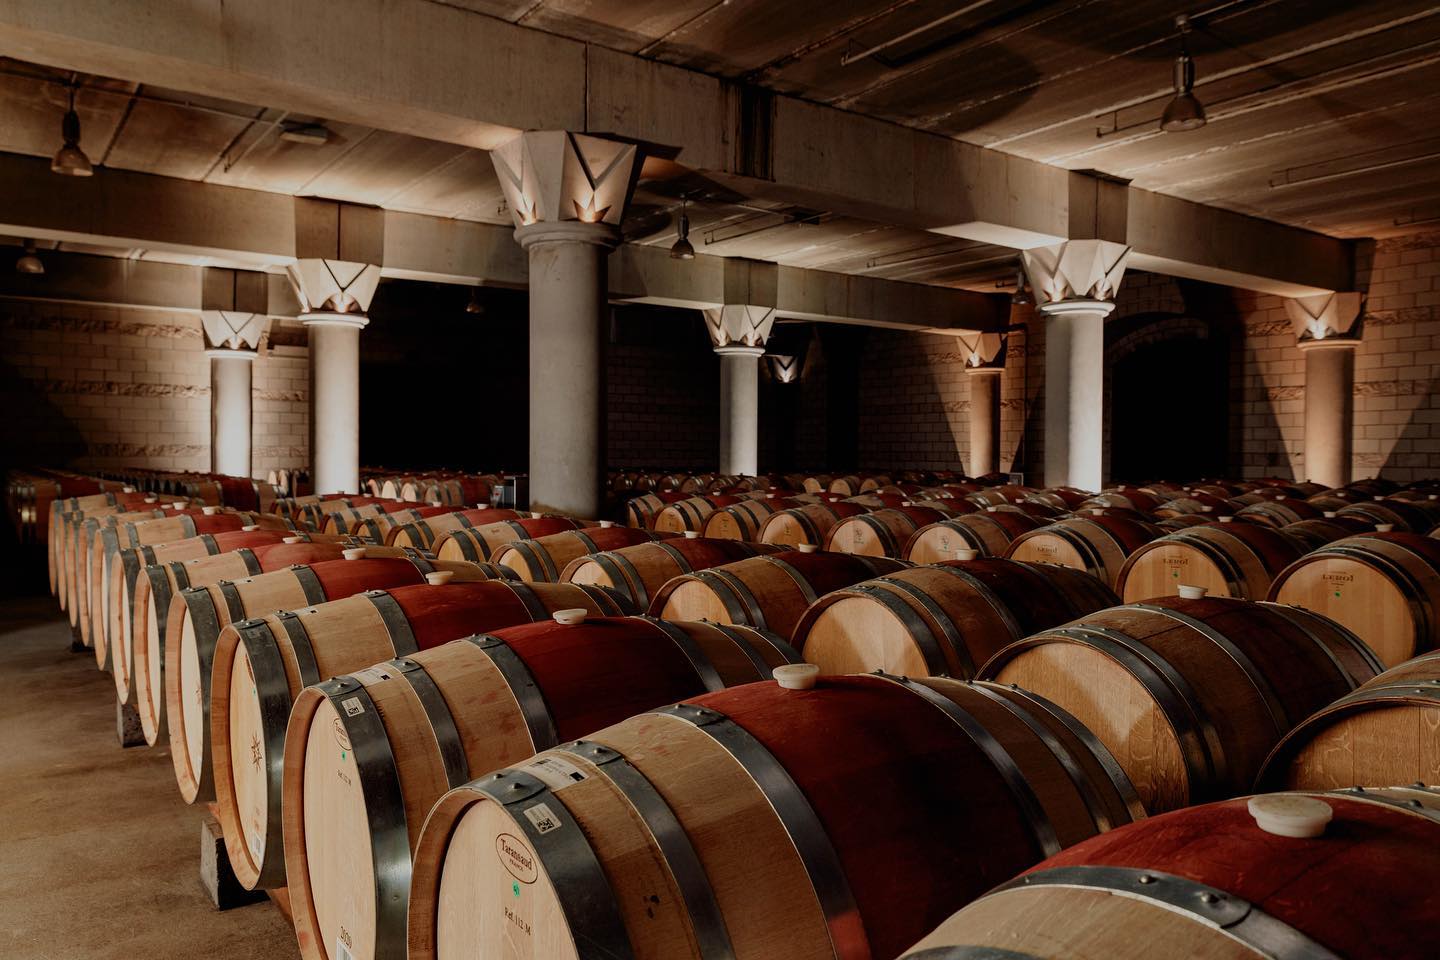 Underground wine barrel storage room for aging